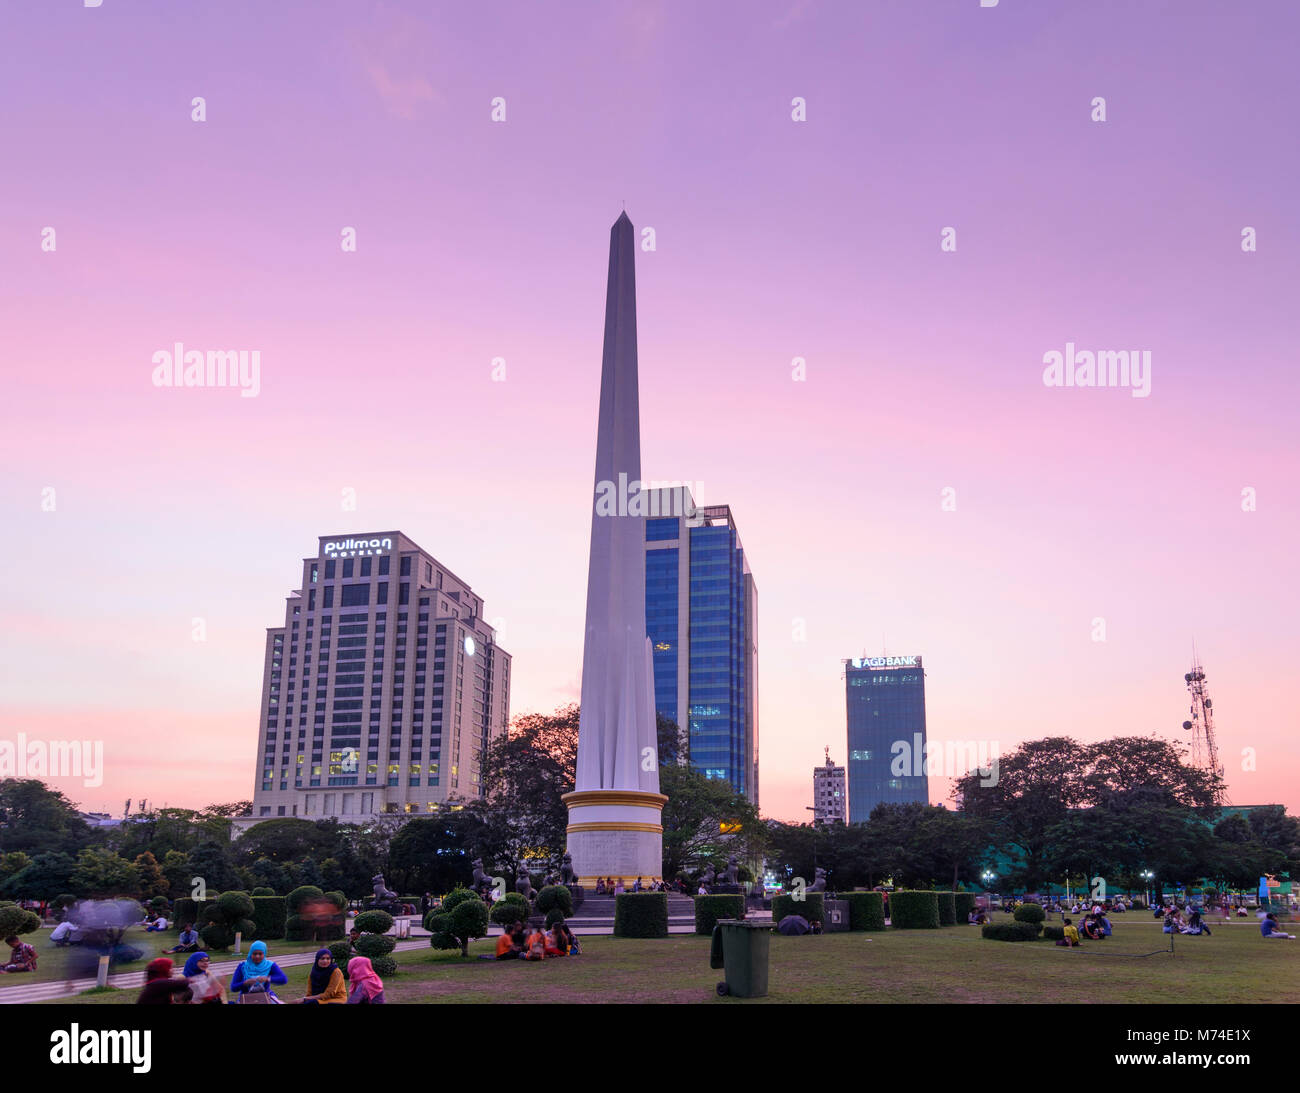 Yangon (Rangoon): Mahabandula (Mahabandoola) giardino (Fytche Square) memorial park, indipendenza monumento, Centrepoint torri, la gente seduta a meado Foto Stock